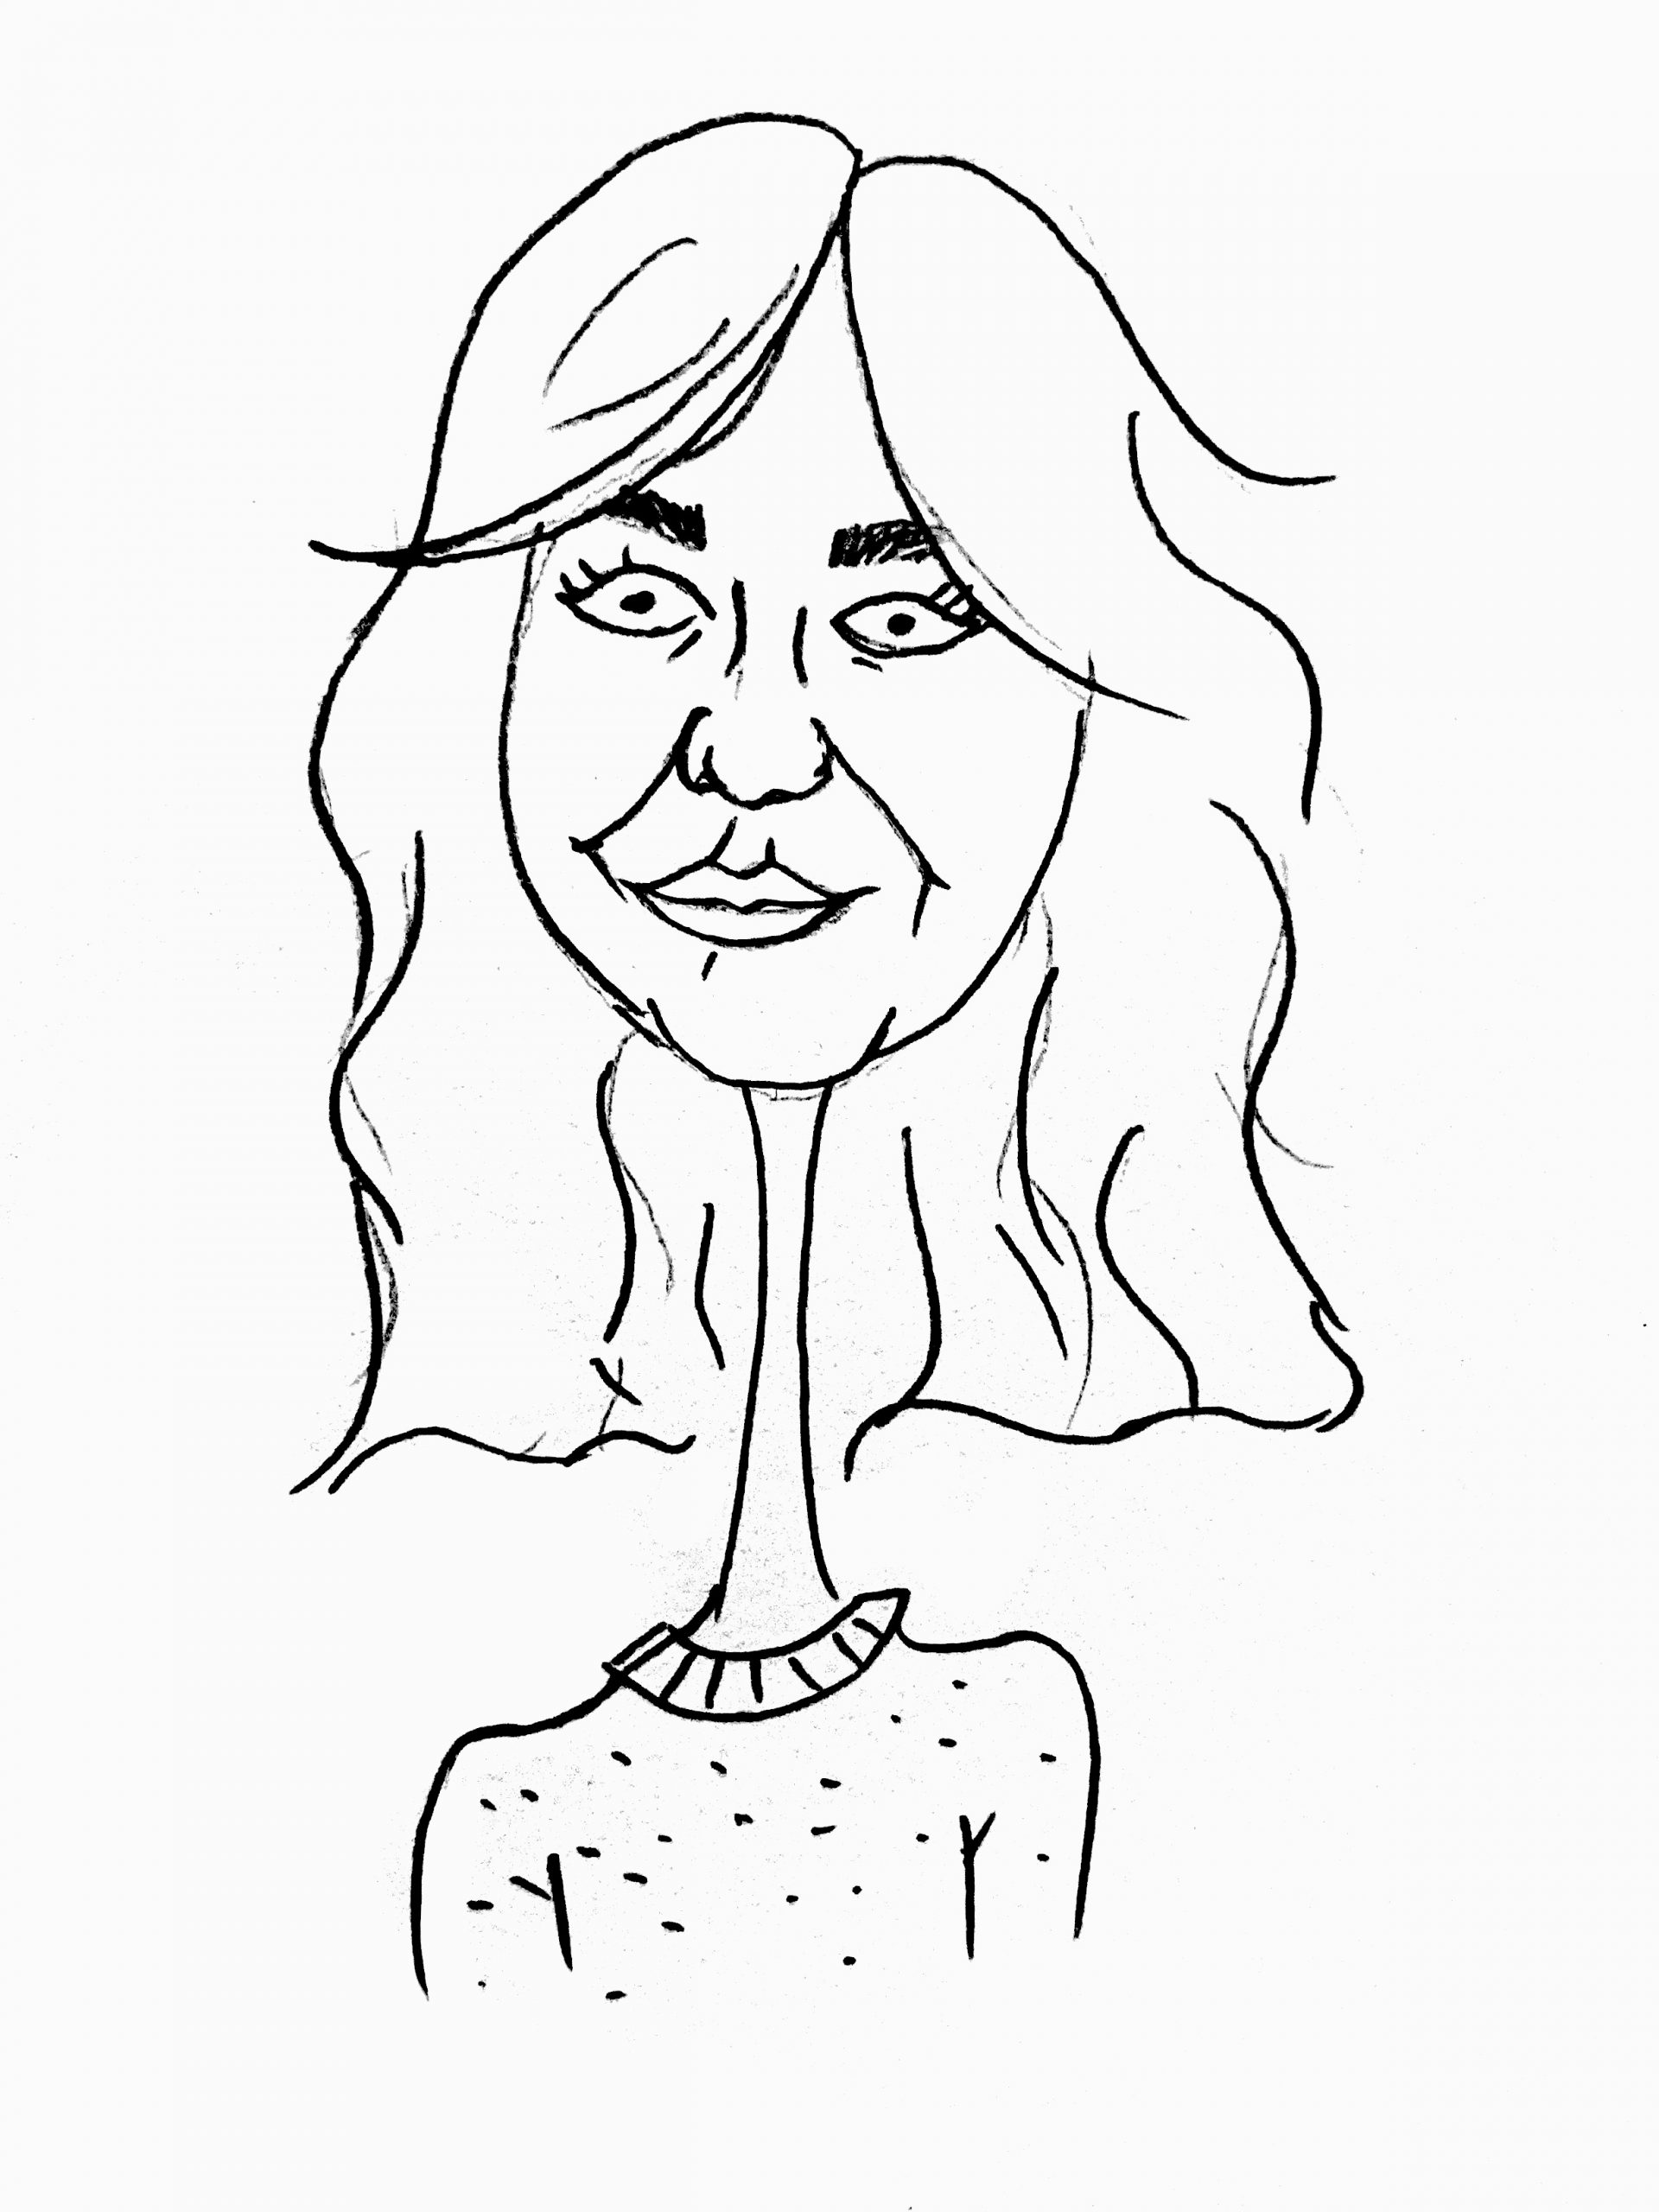 Sketched Caricature of Emma Landolina